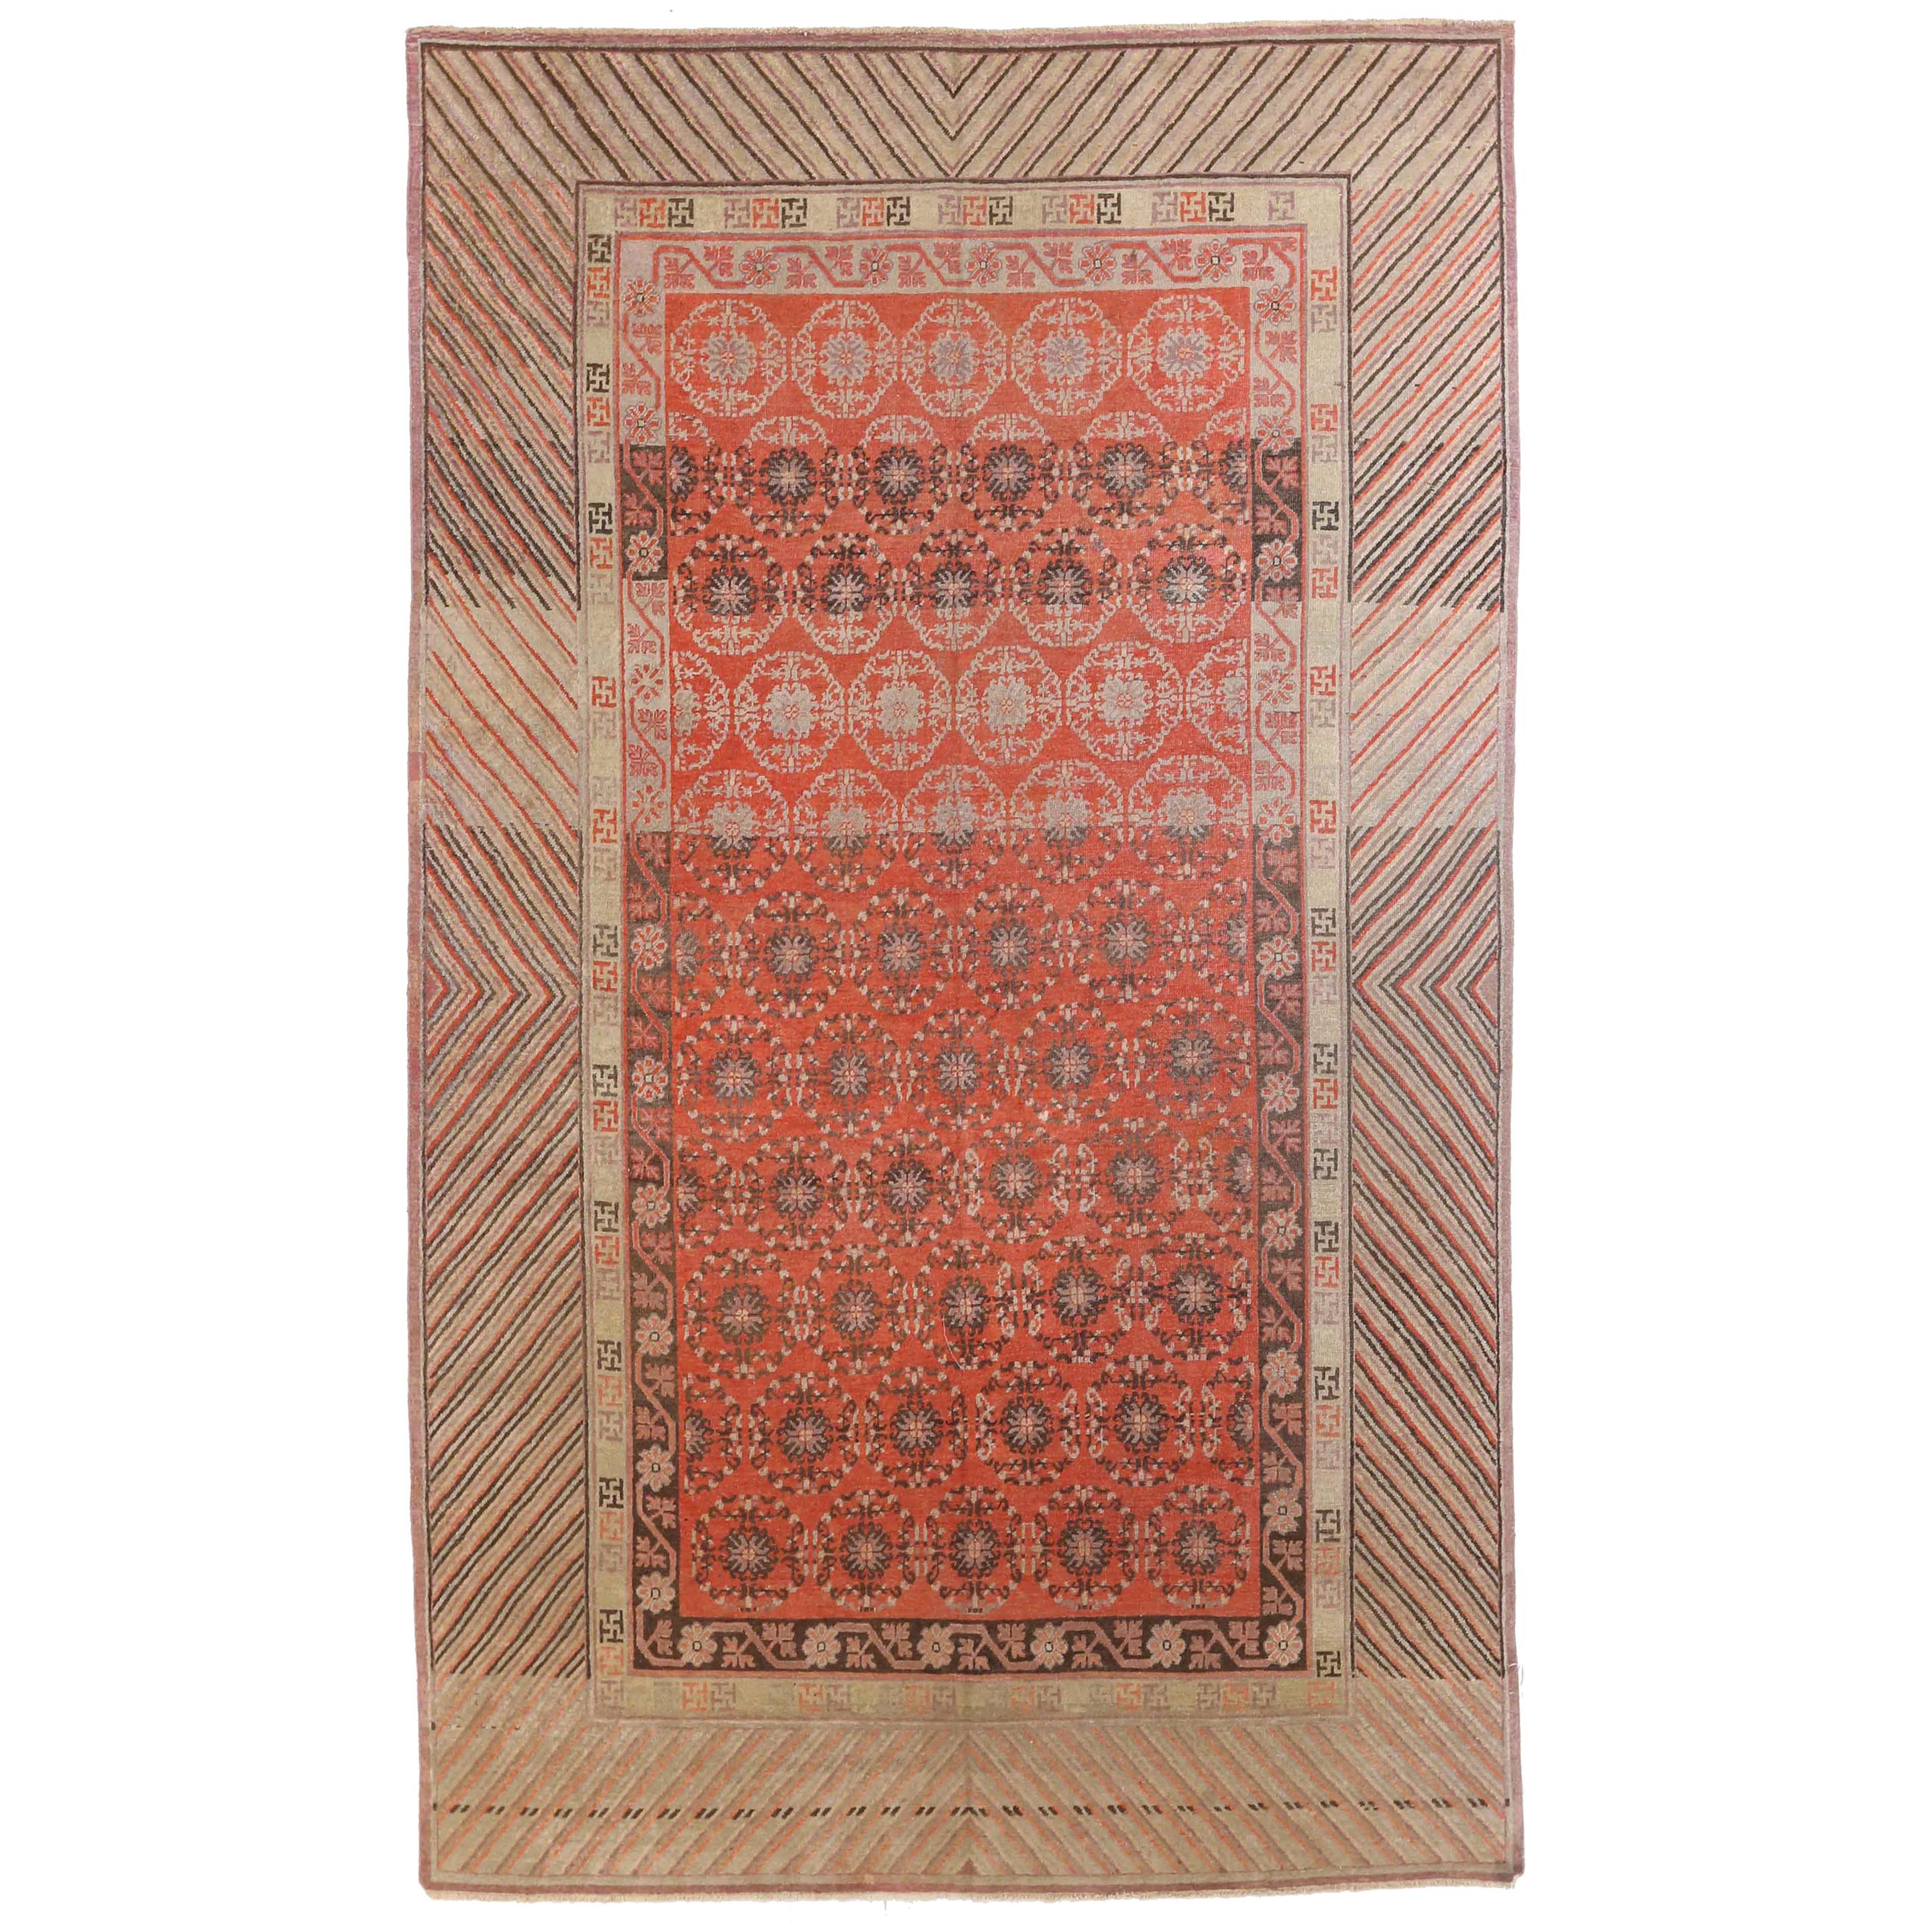 1920s Antique Central Asian Rug Khotan Design with Vibrant Geometric Border For Sale